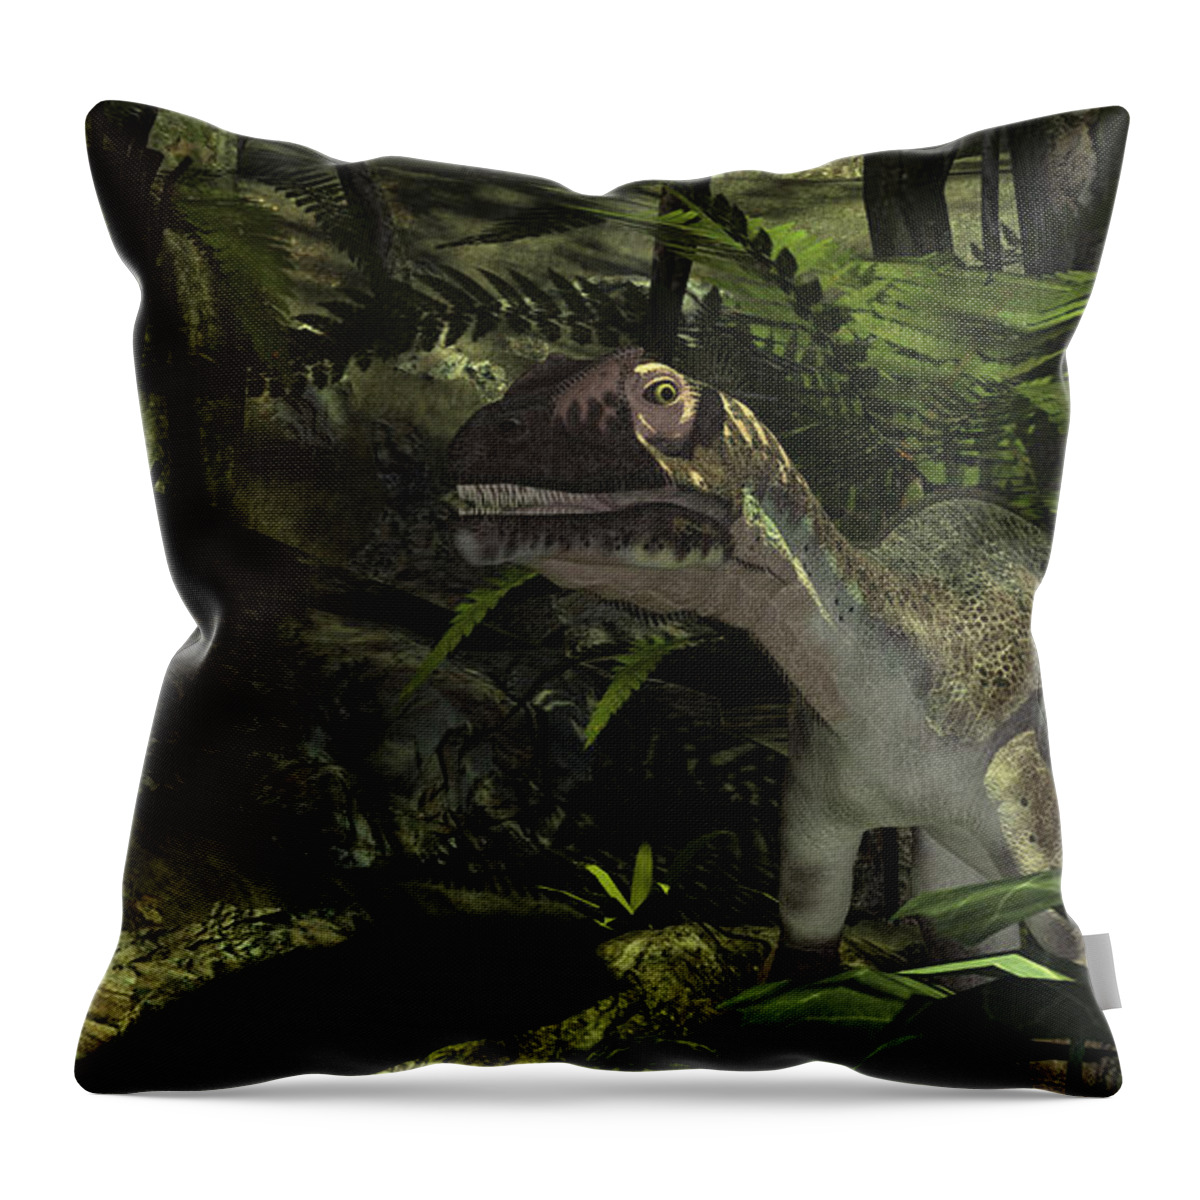 Dinosaur Throw Pillow featuring the digital art Utahraptor In A Prehistoric Forest by Kostyantyn Ivanyshen